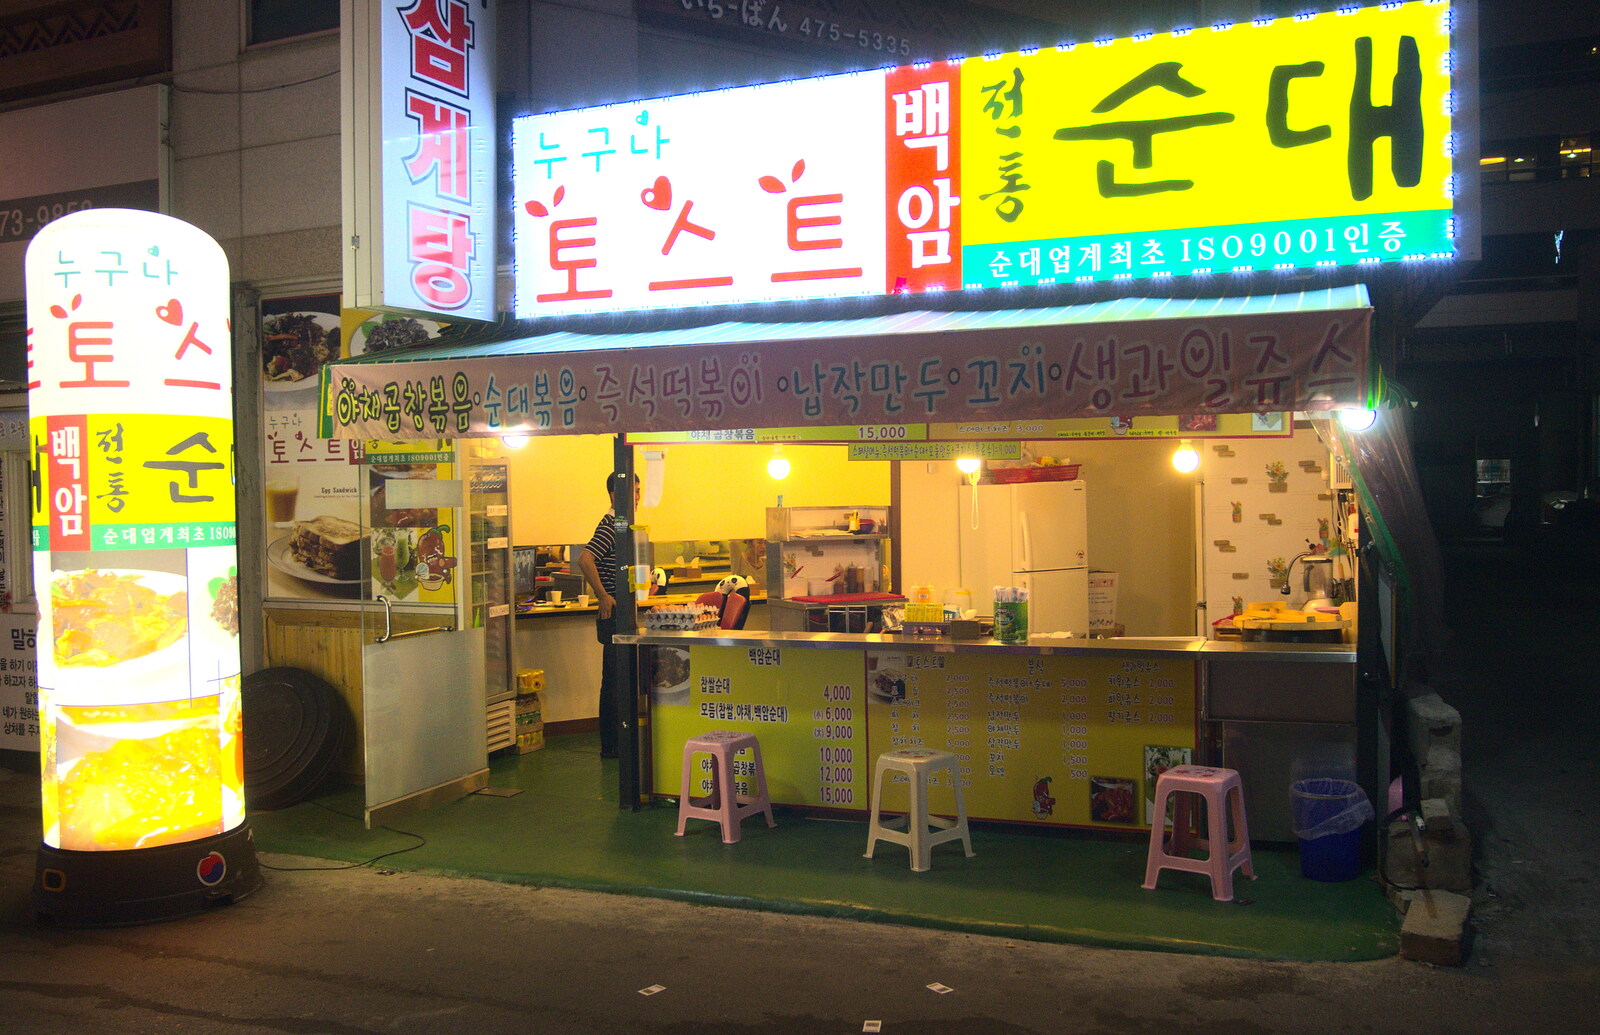 More street food from Working at Samsung, and Geumosan Mountain, Gumi, Gyeongsangbuk-do, Korea - 24th June 2012